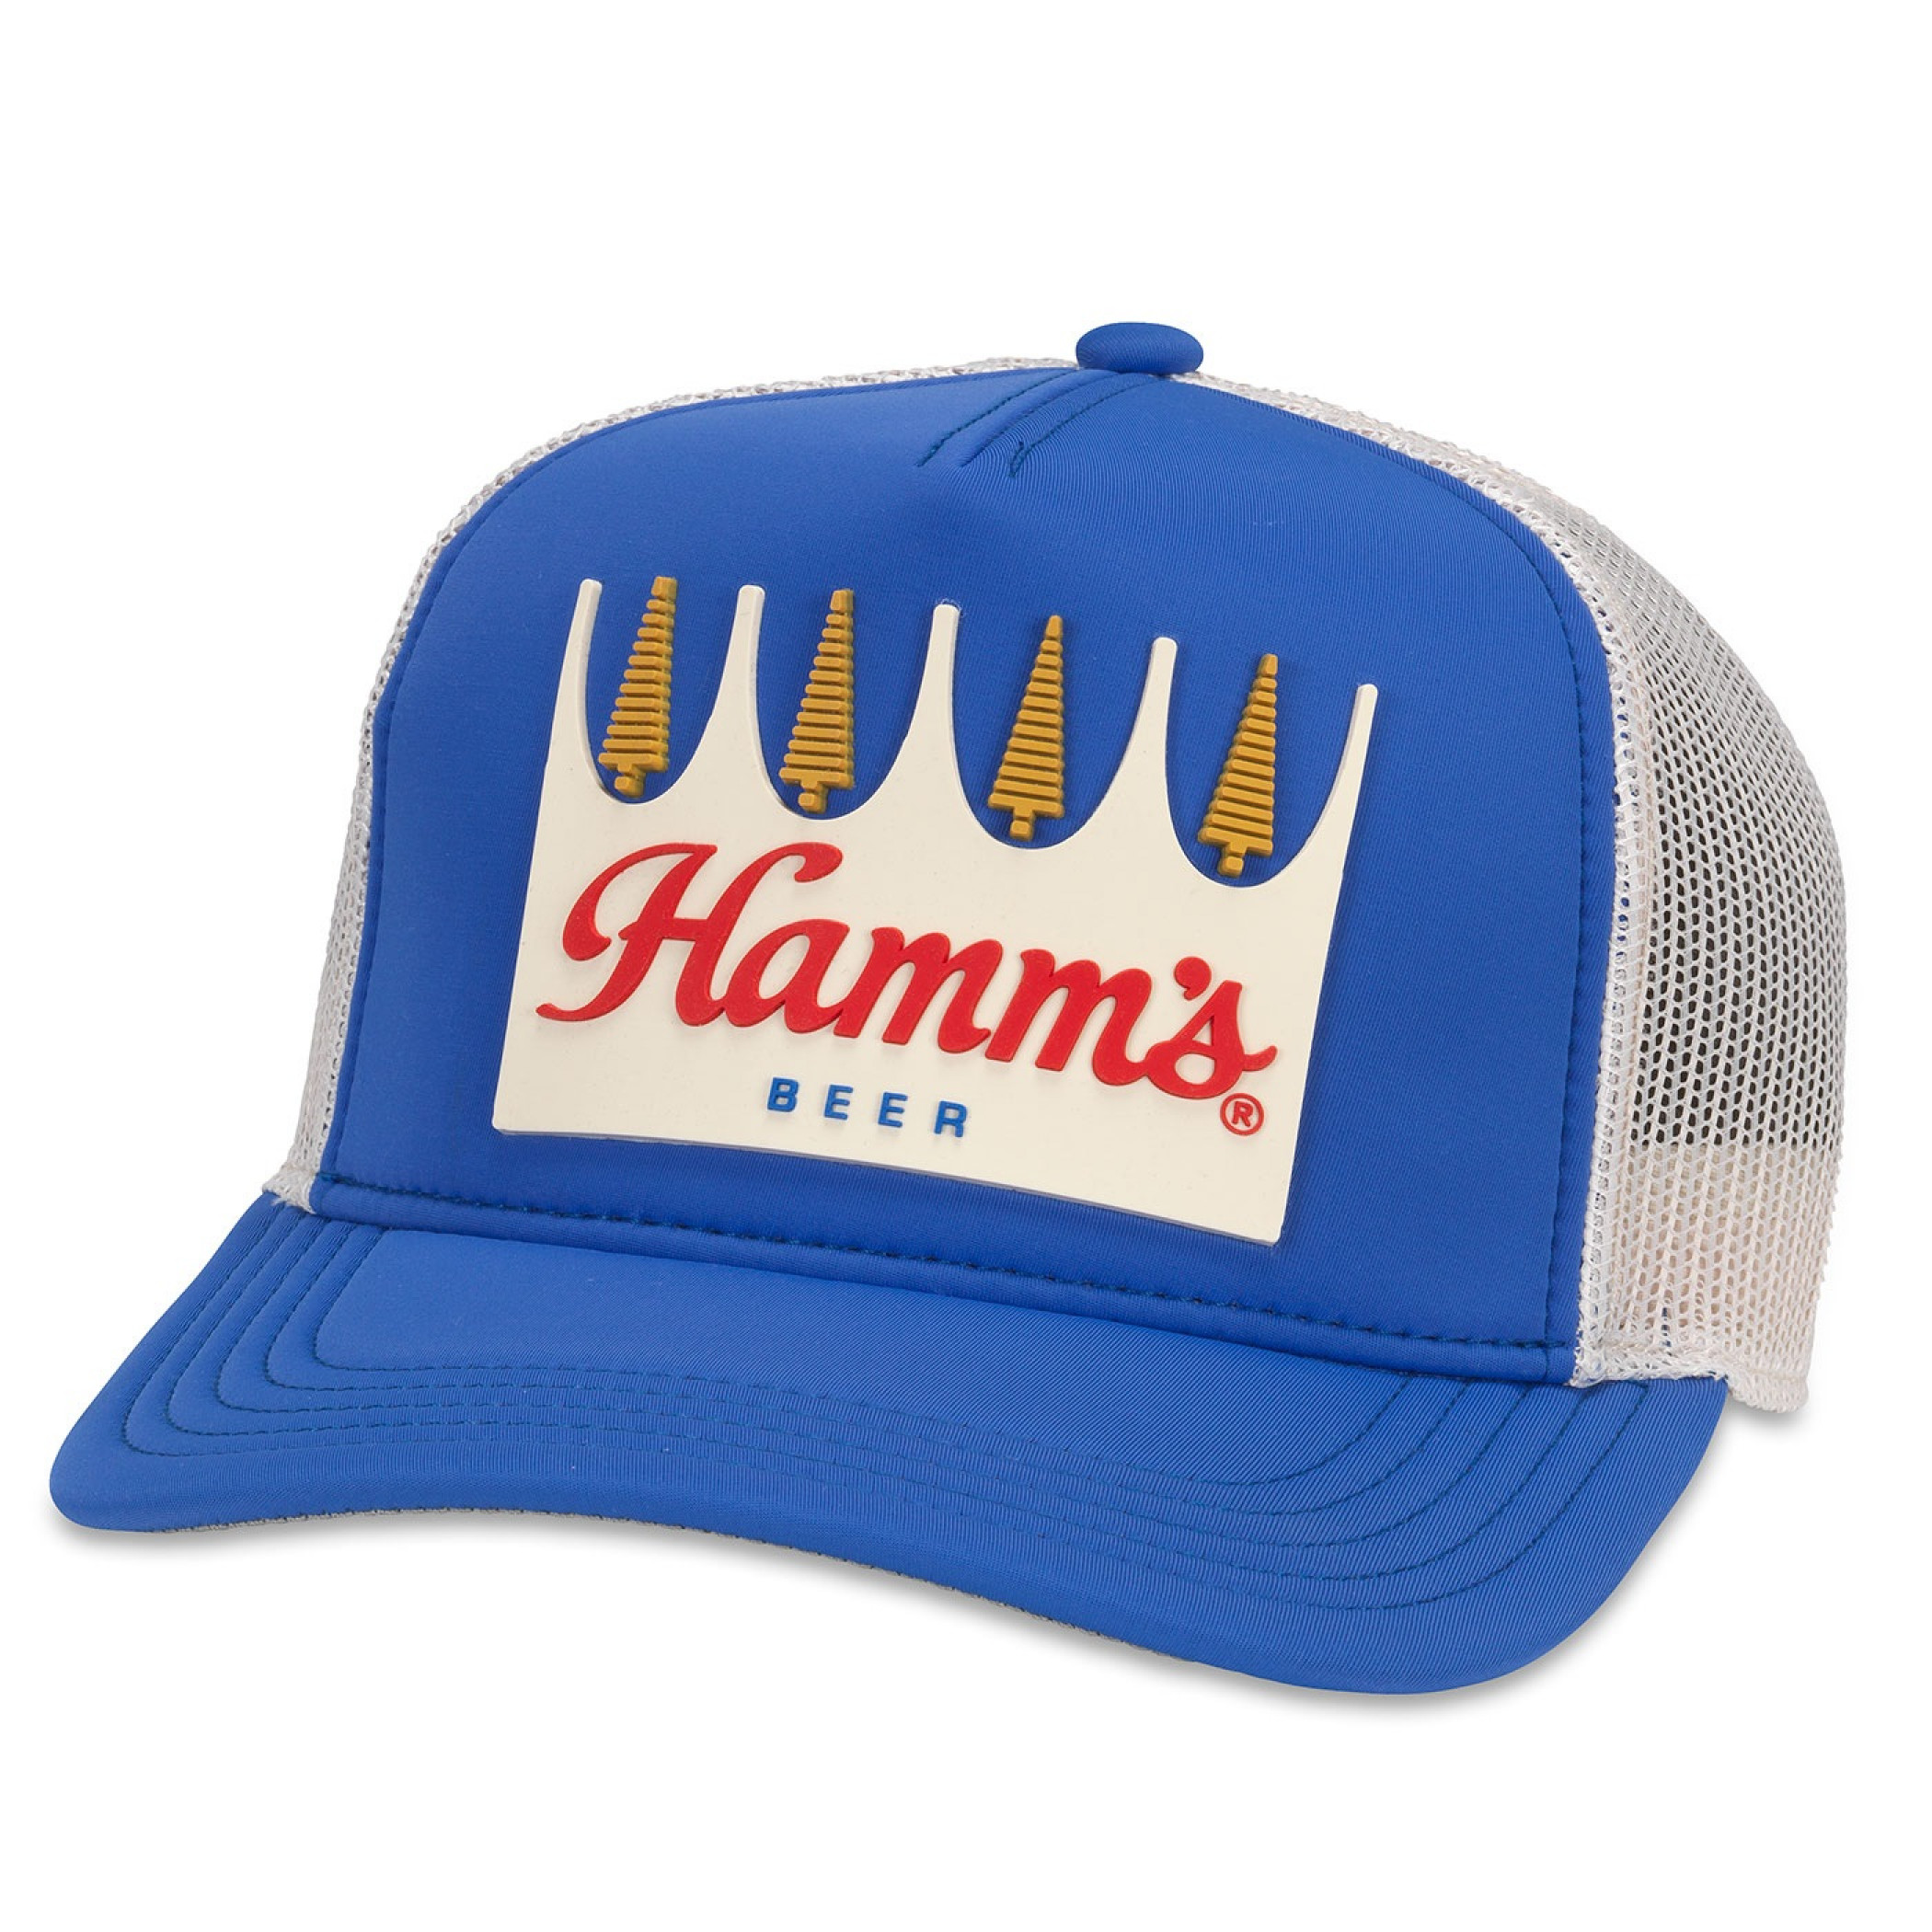 Hamm's Beer Vintage Blue Trucker Hat